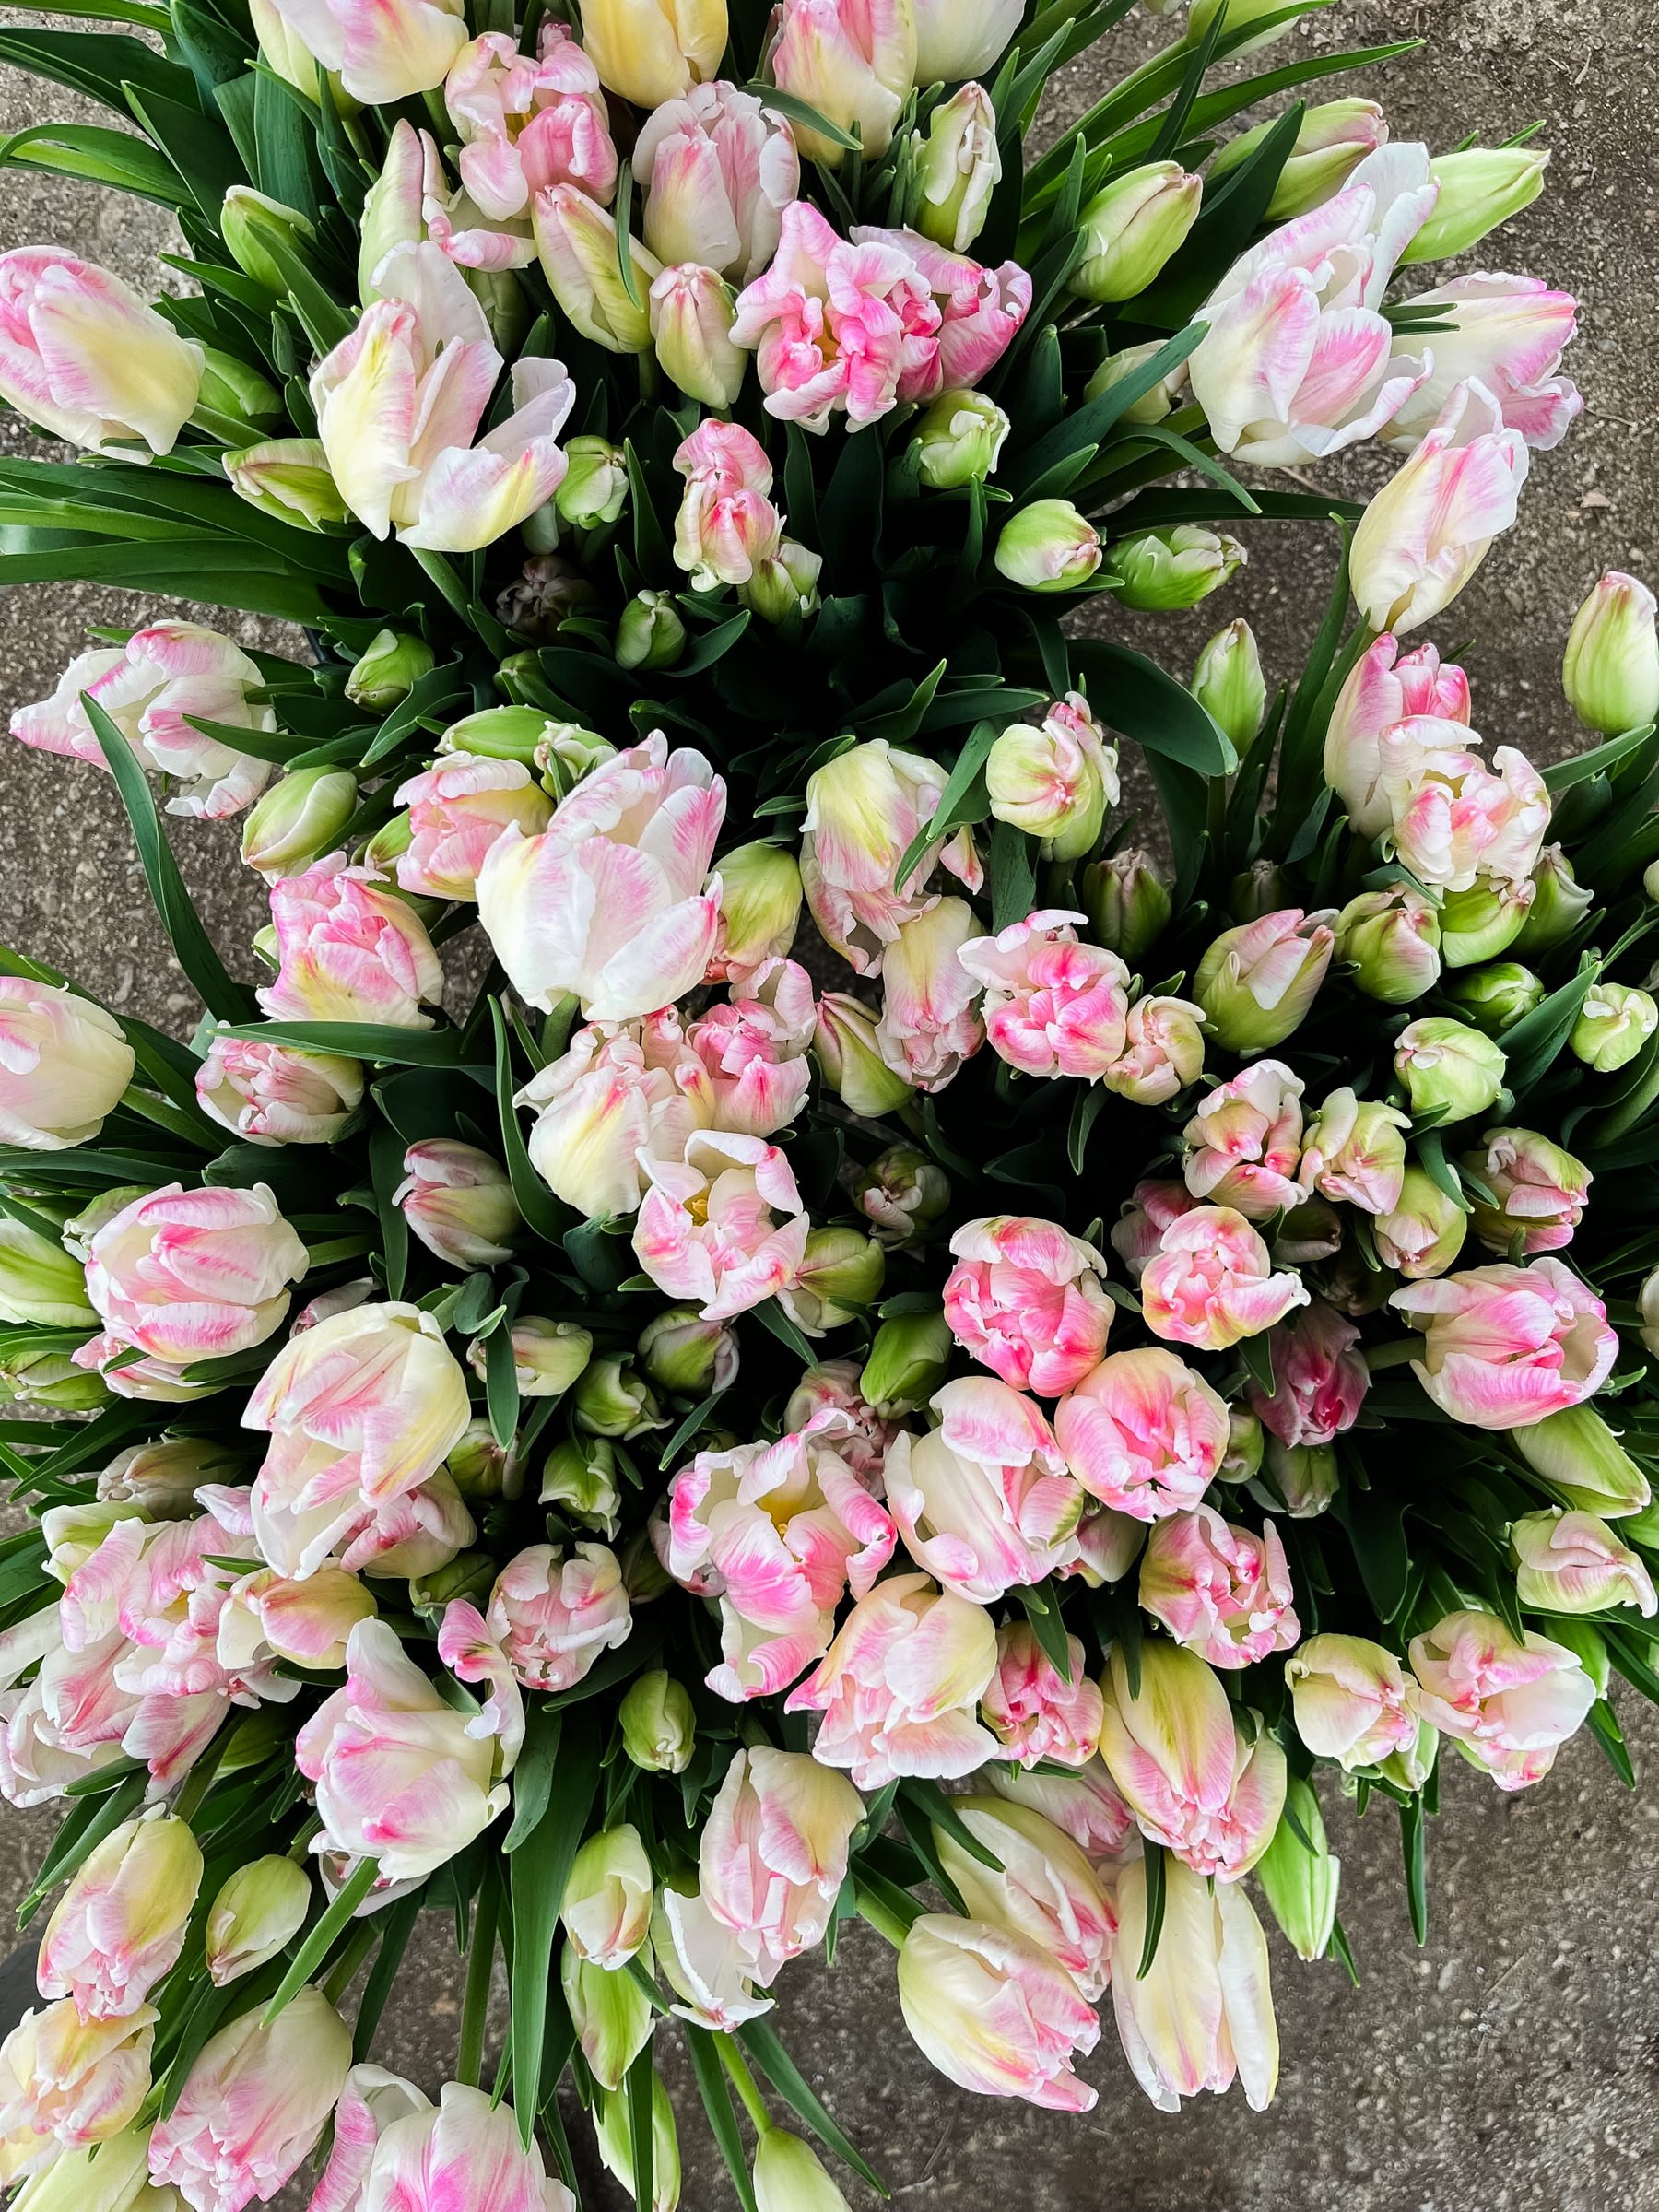 Diddle-And-Zen-Vermont-Wedding-Floral-Designer-Arrangement-Bouquet-Diddle-and-Zen-Vermont-Florist-Tulip-Subscription09.jpg